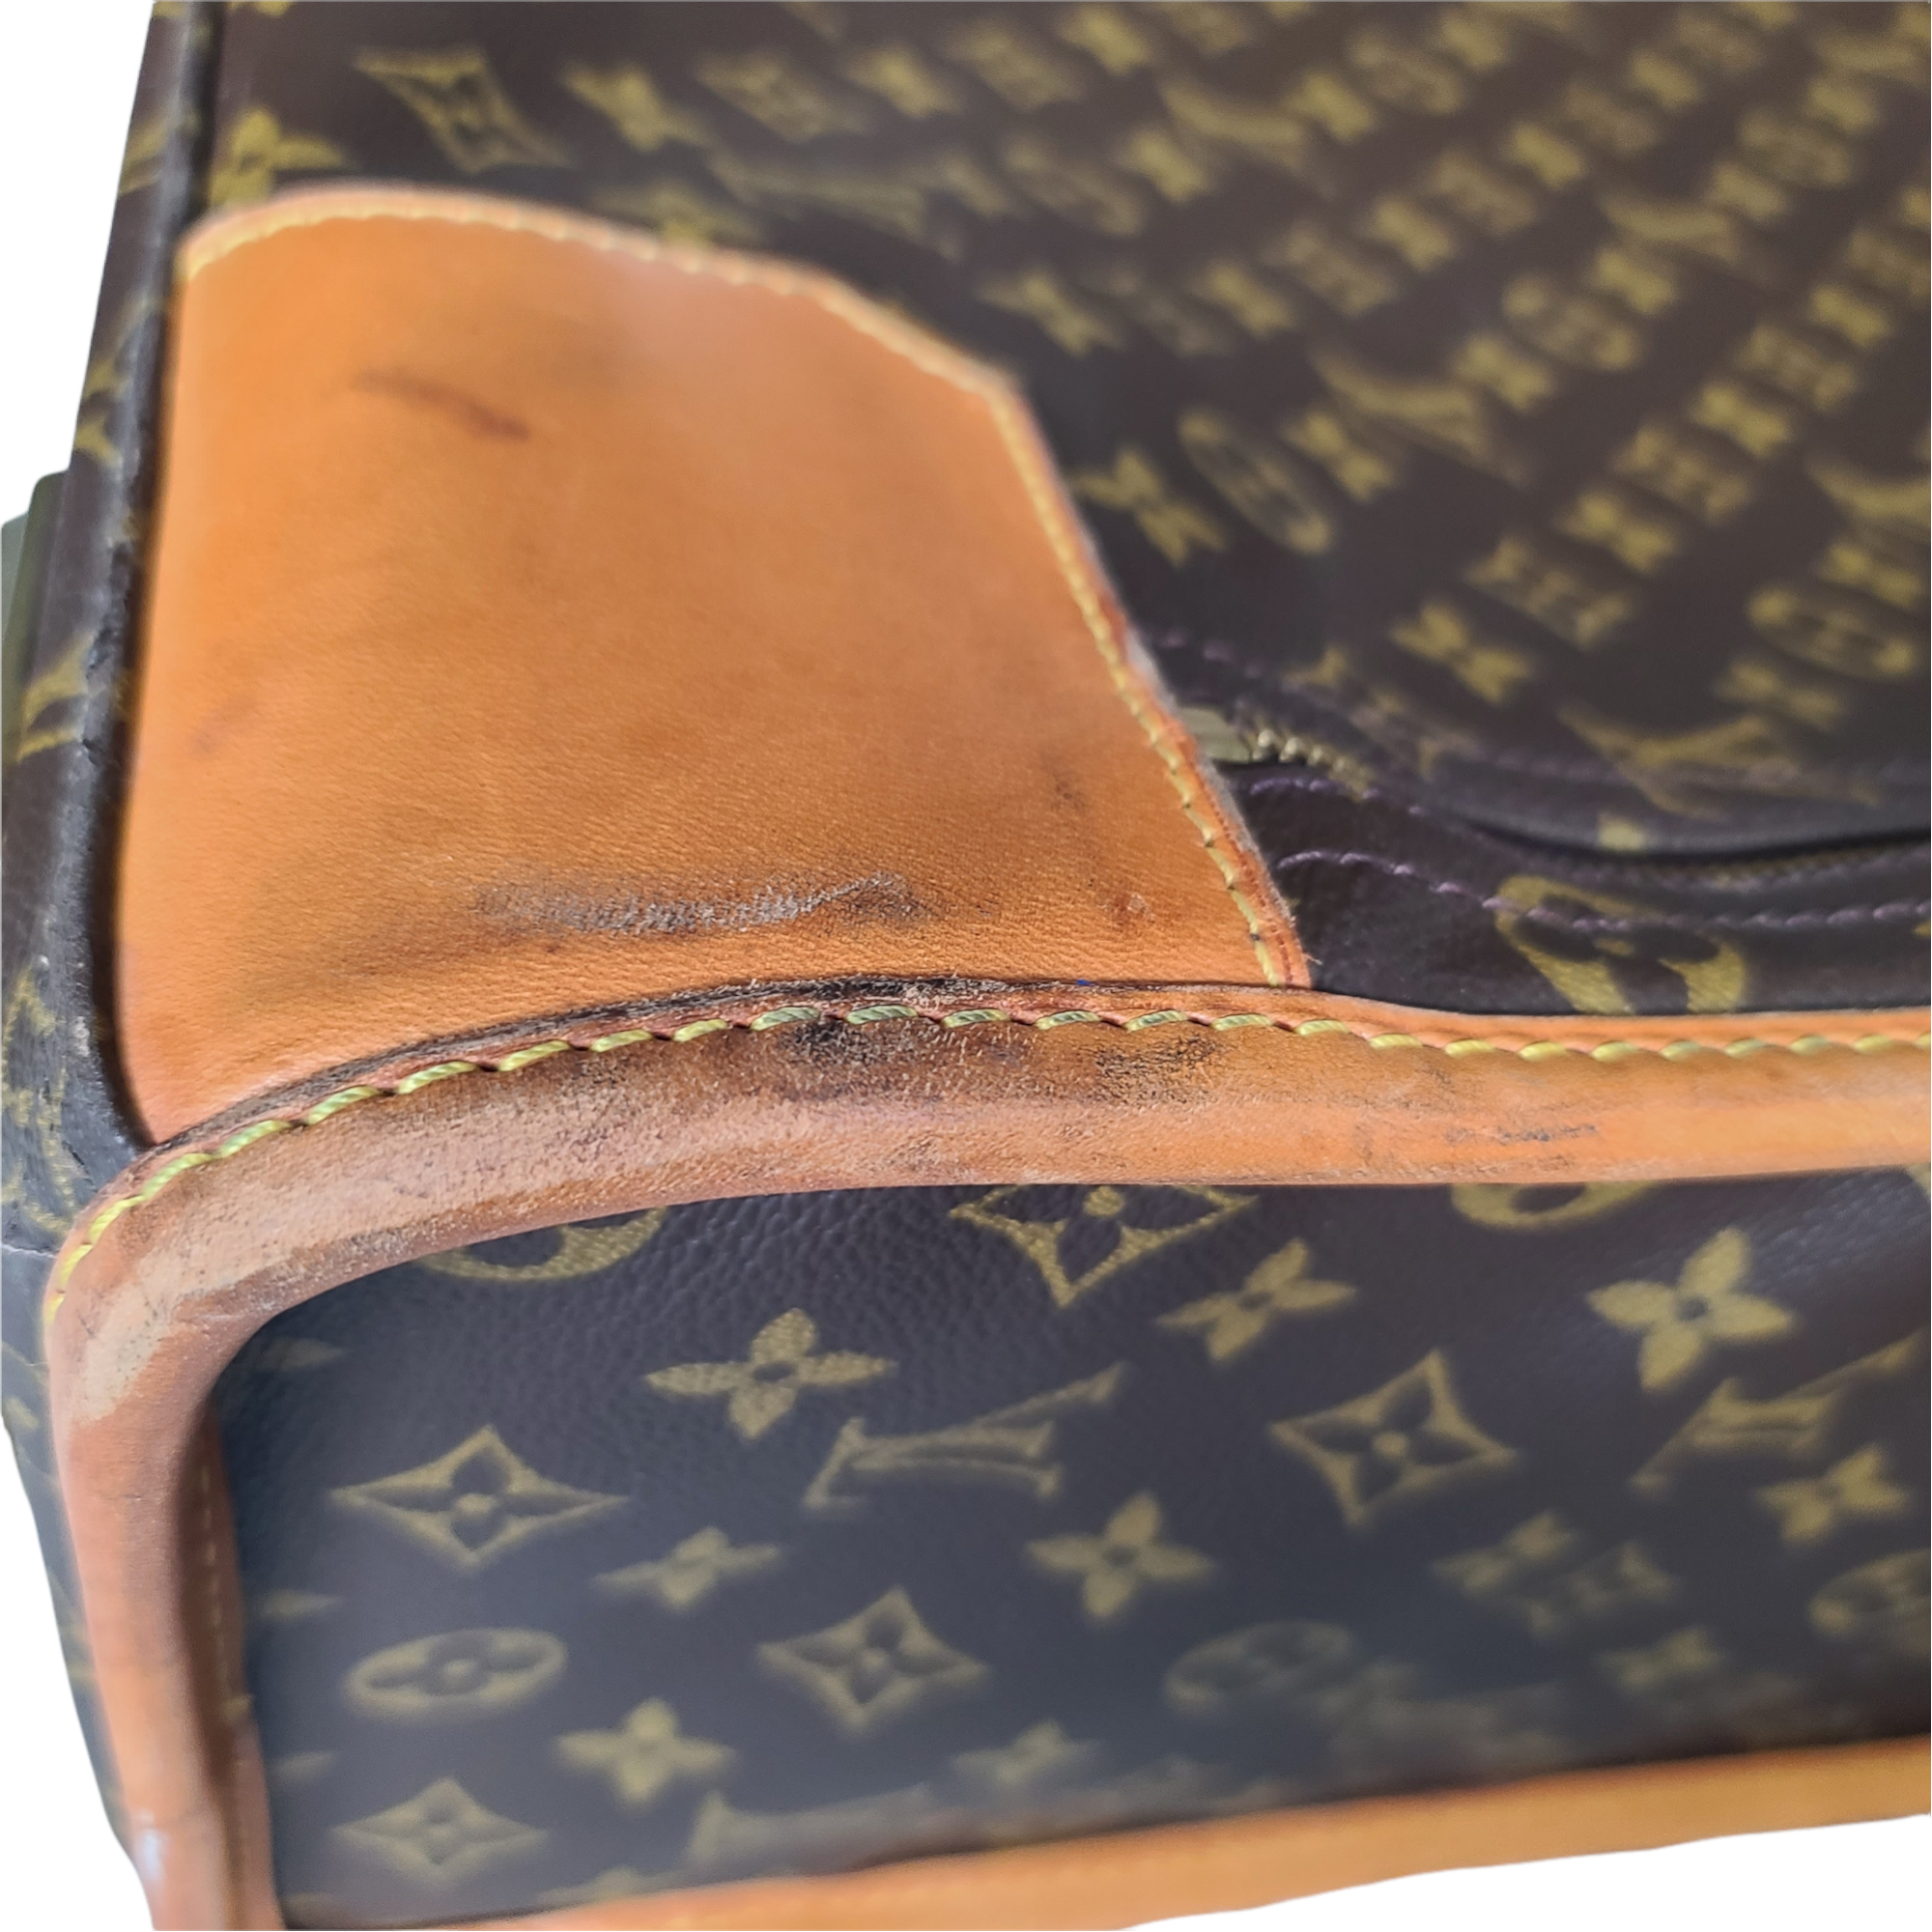 LOUIS VUITTON All Pilot Case Black Textured Leather Carry-On Roller Lu –  Sui Generis Designer Consignment